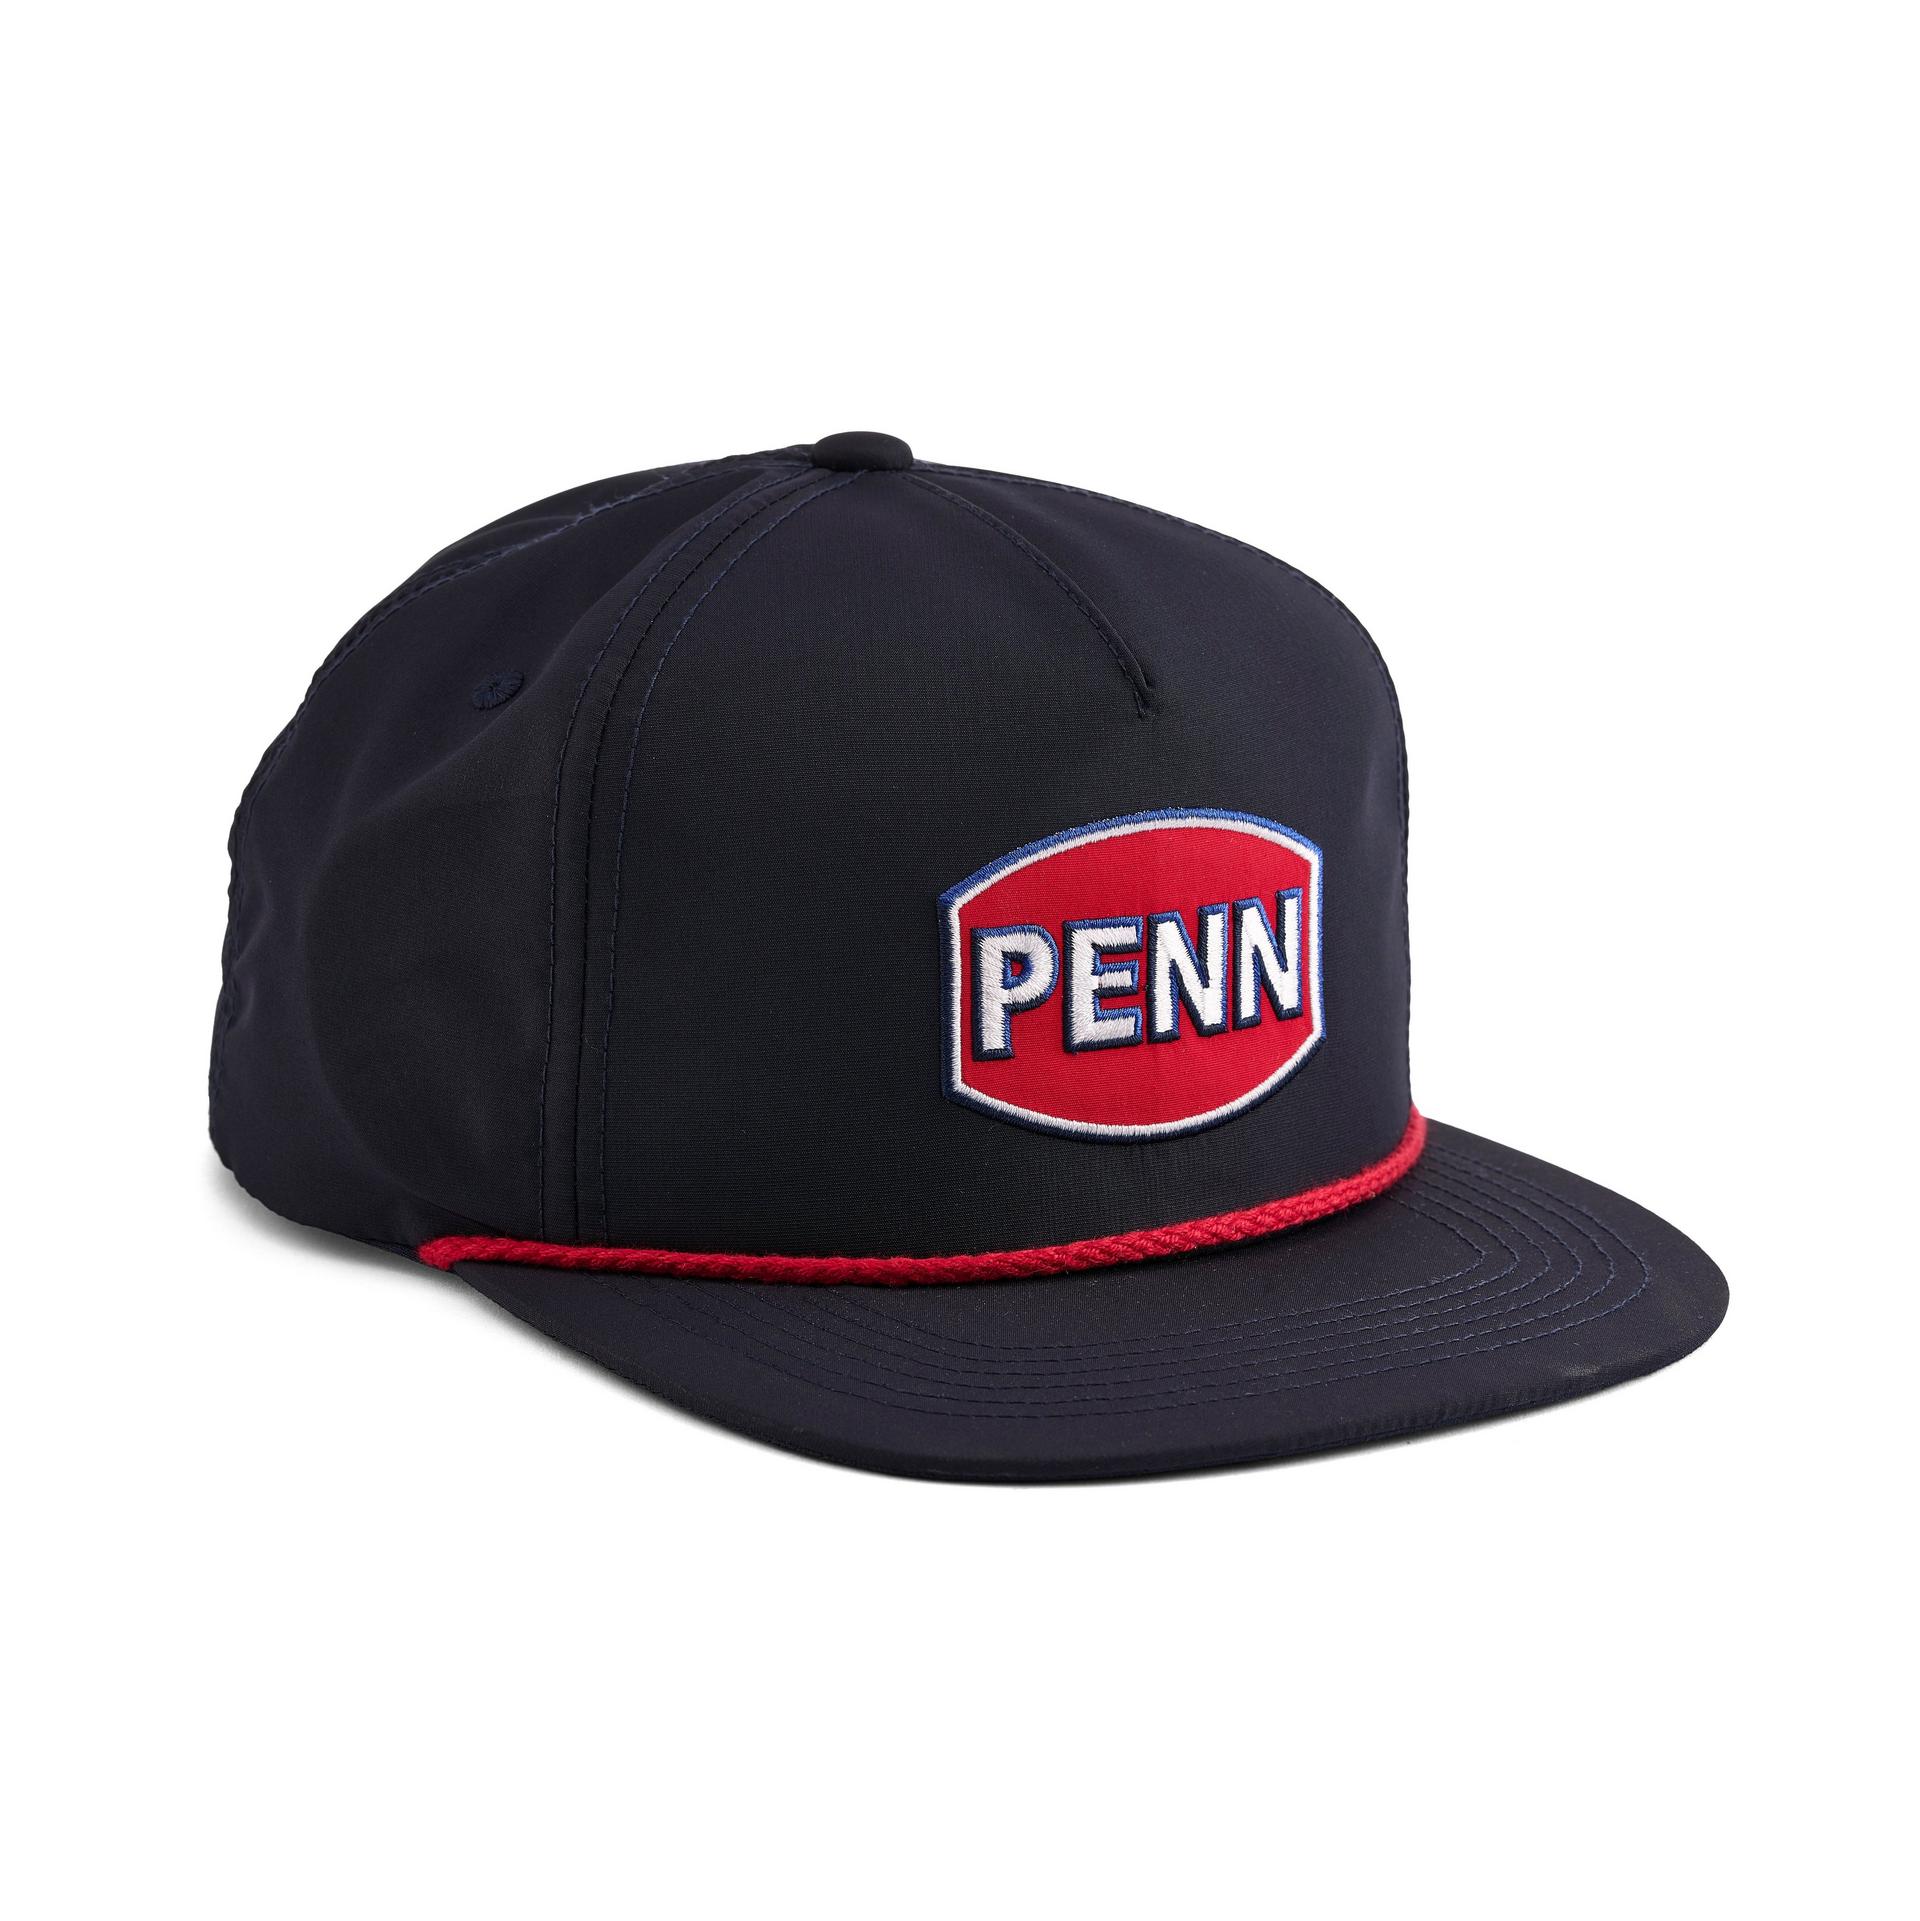 PENN PENN® Performance Rope Hat